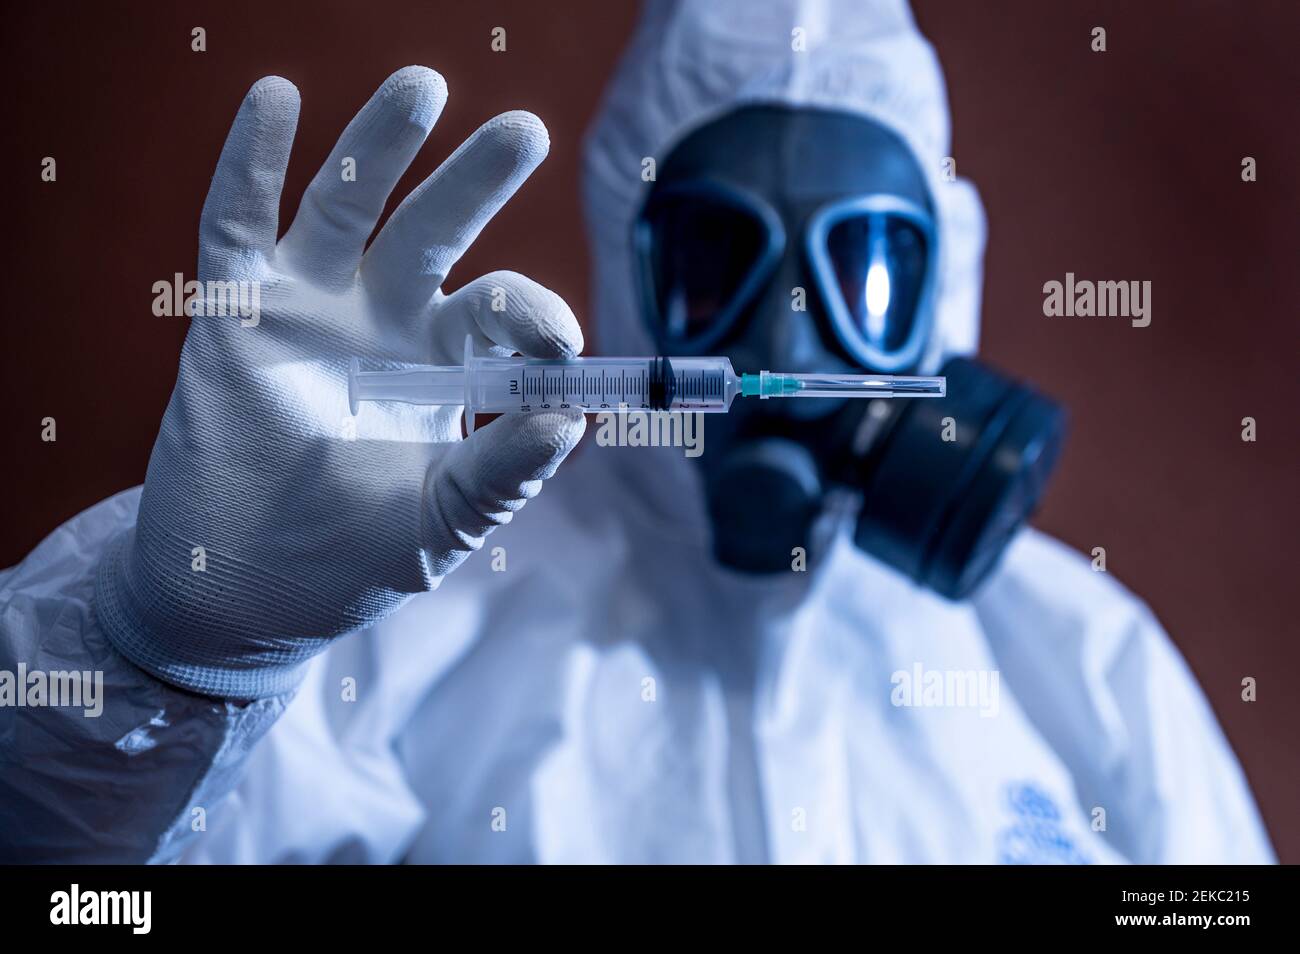 Mature man in tear gas mask holding syringe Stock Photo